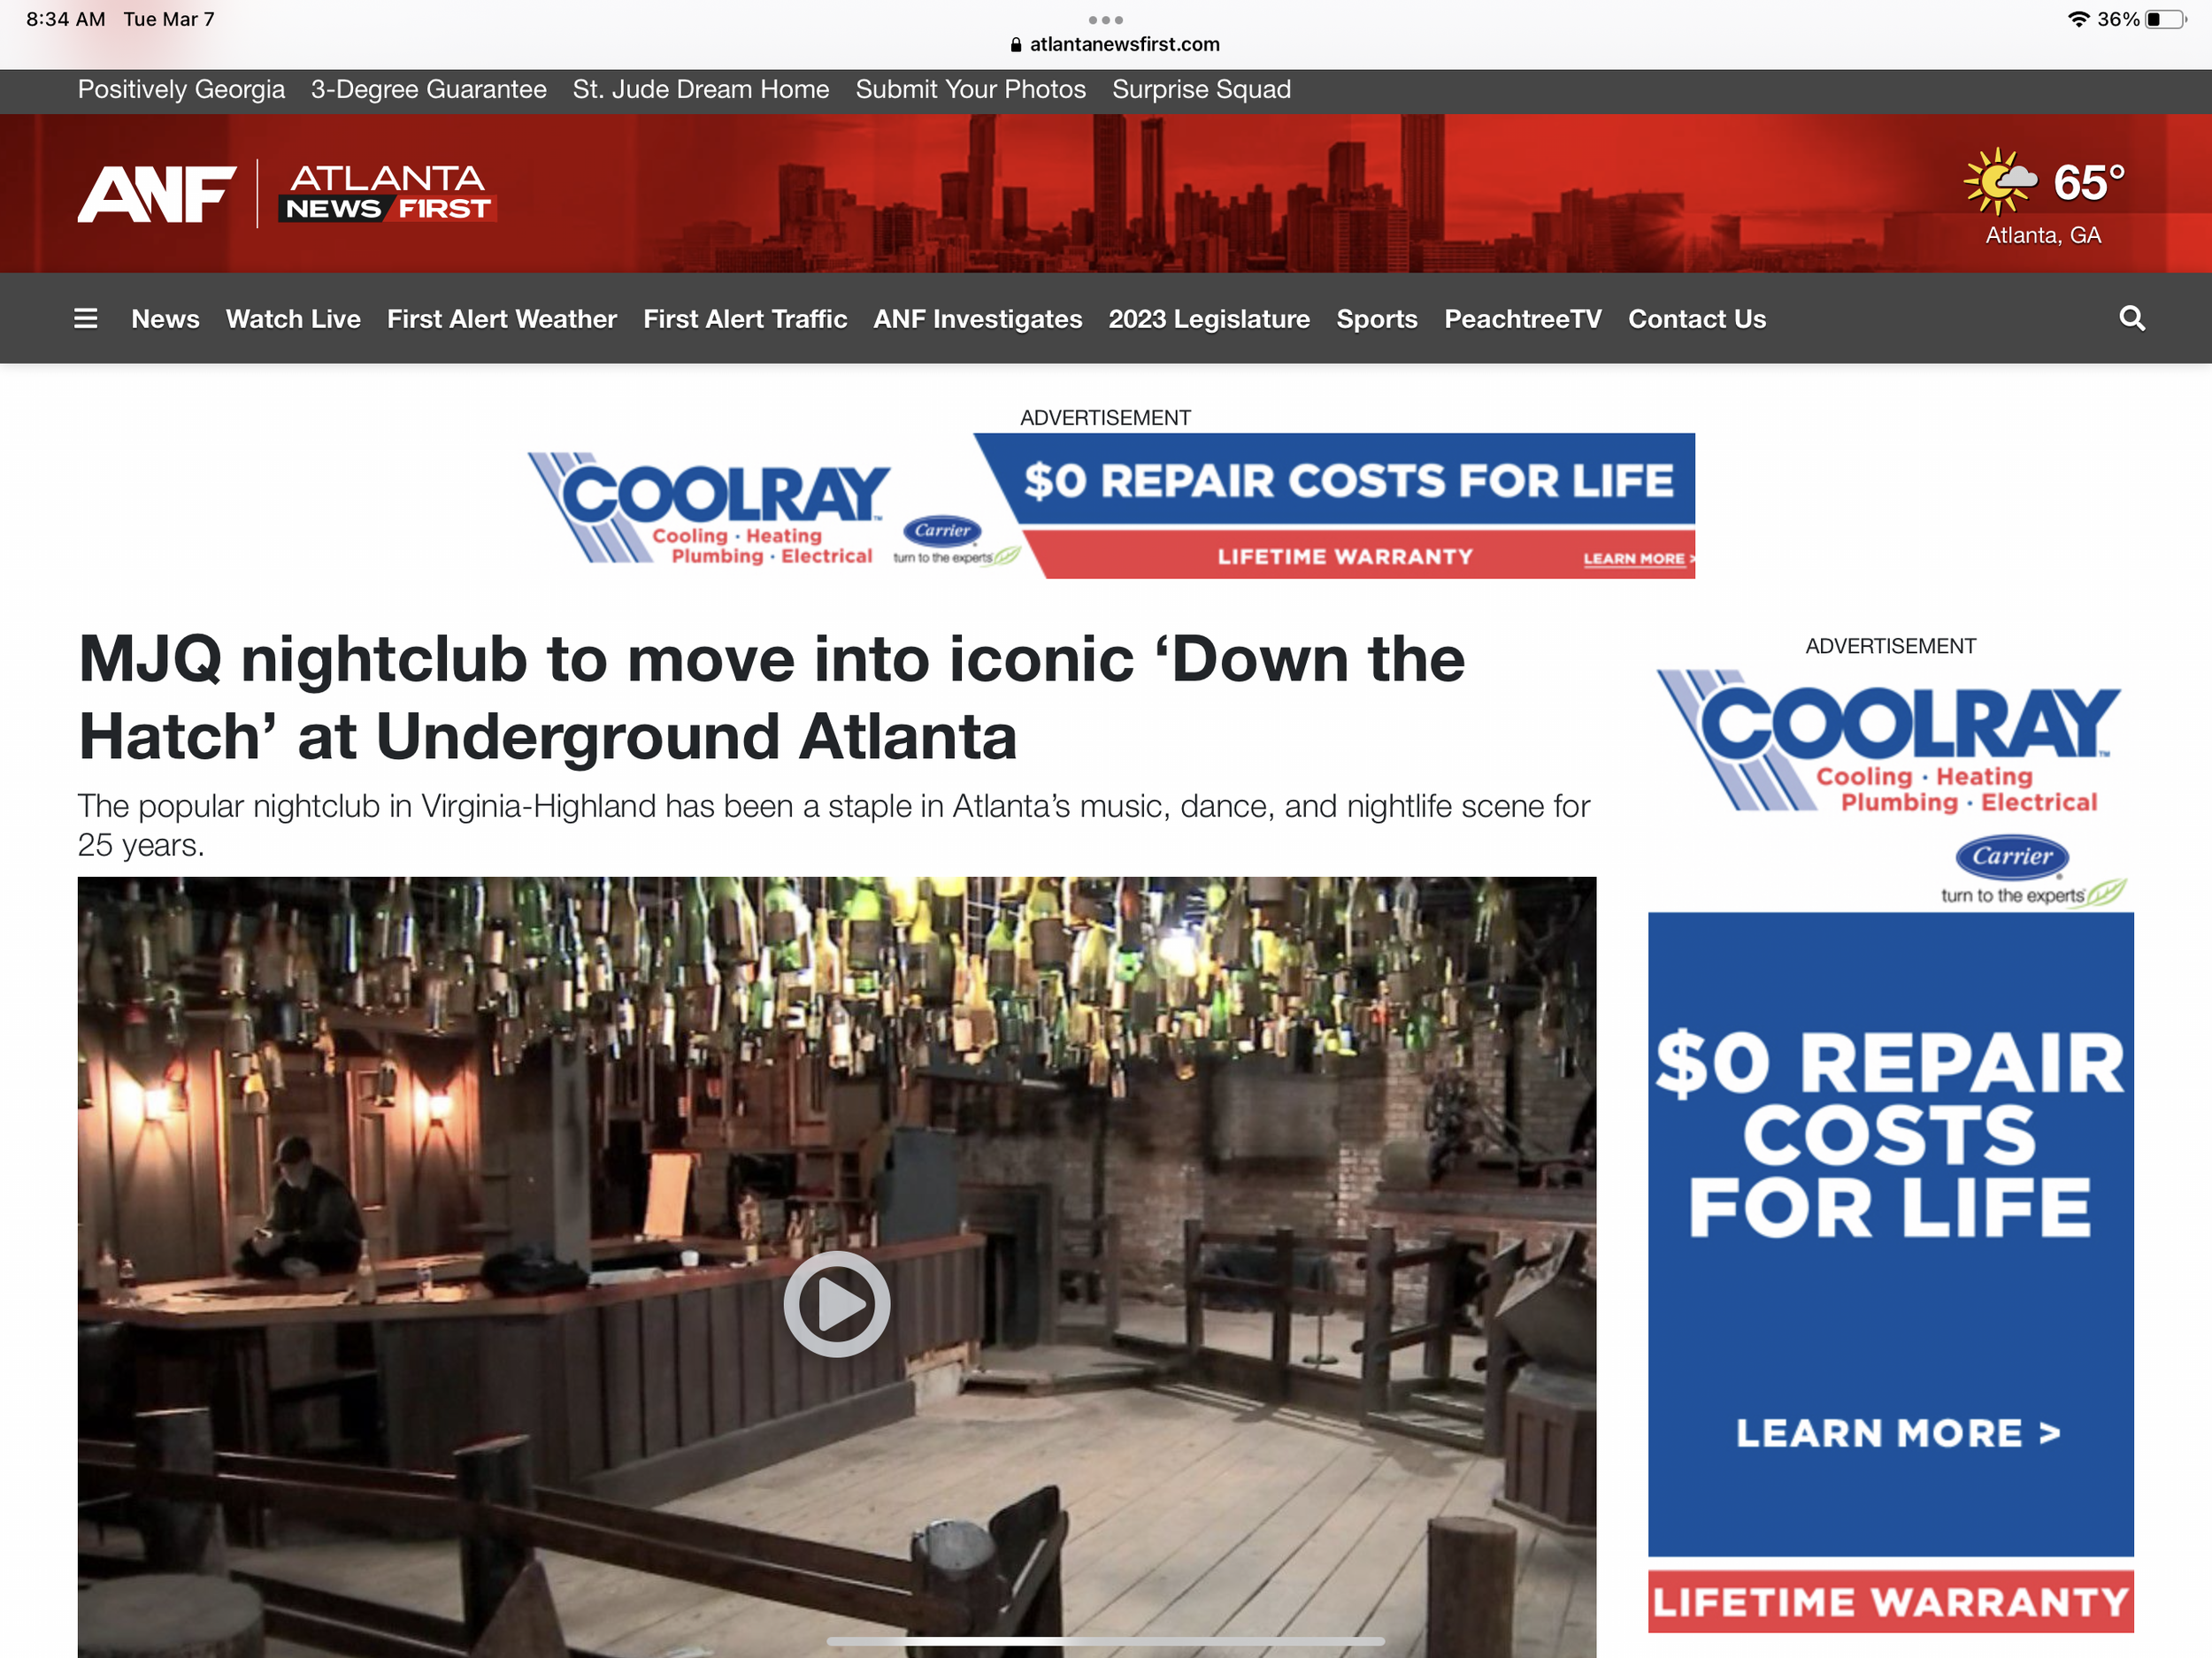 MJQ nightclub to move into iconic “Down the Hatch” at Underground Atlanta